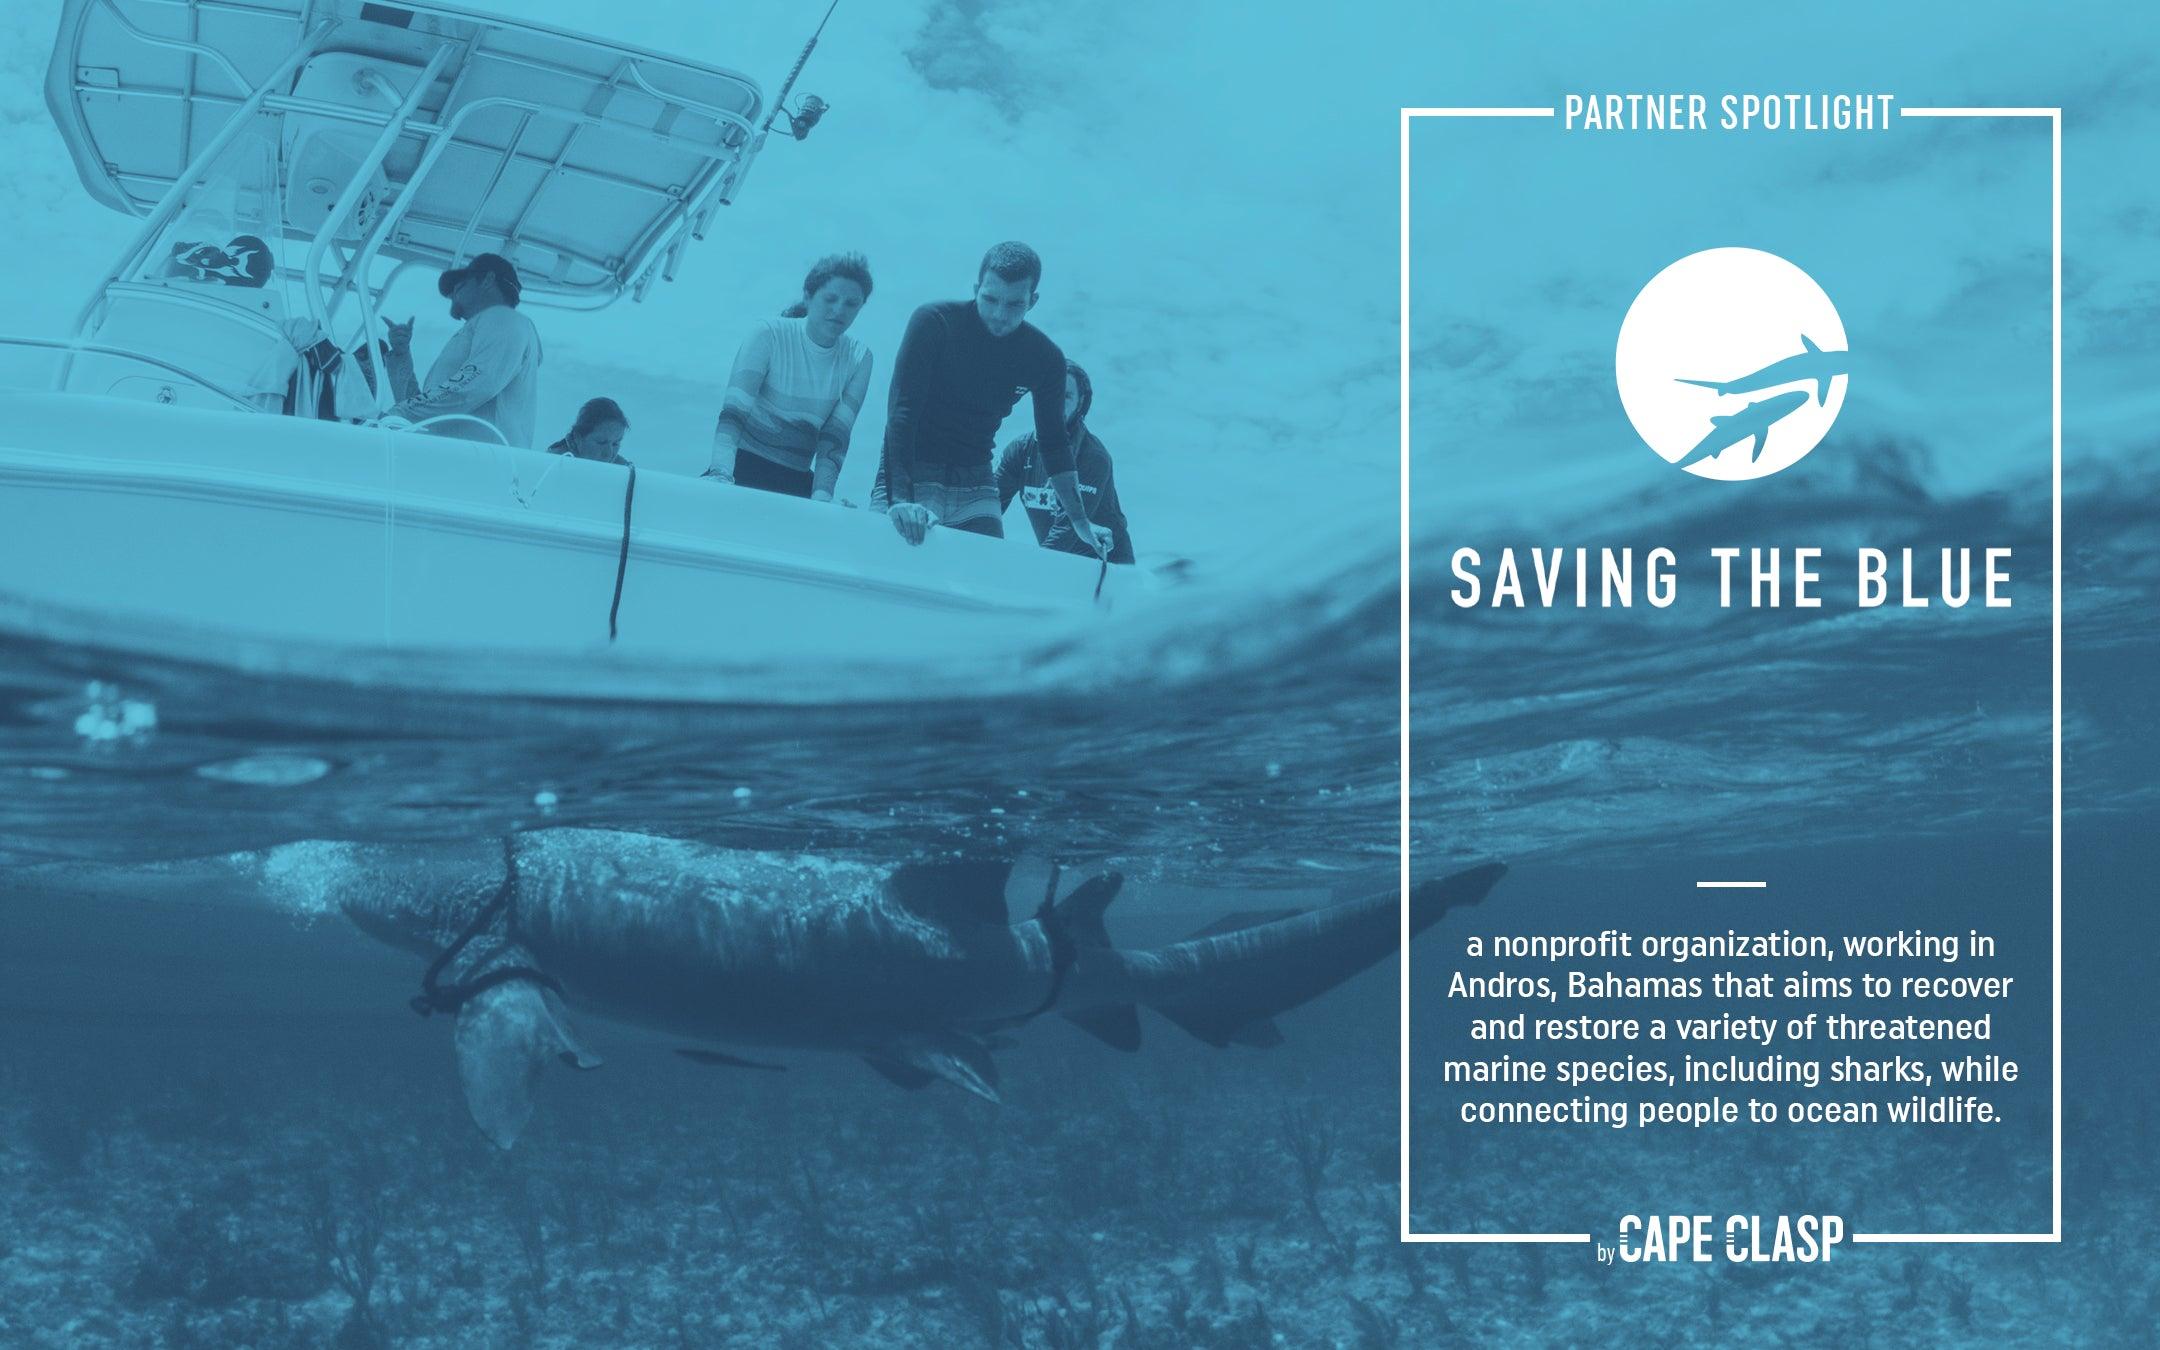 PARTNER SPOTLIGHT: SAVING THE BLUE - Cape Clasp